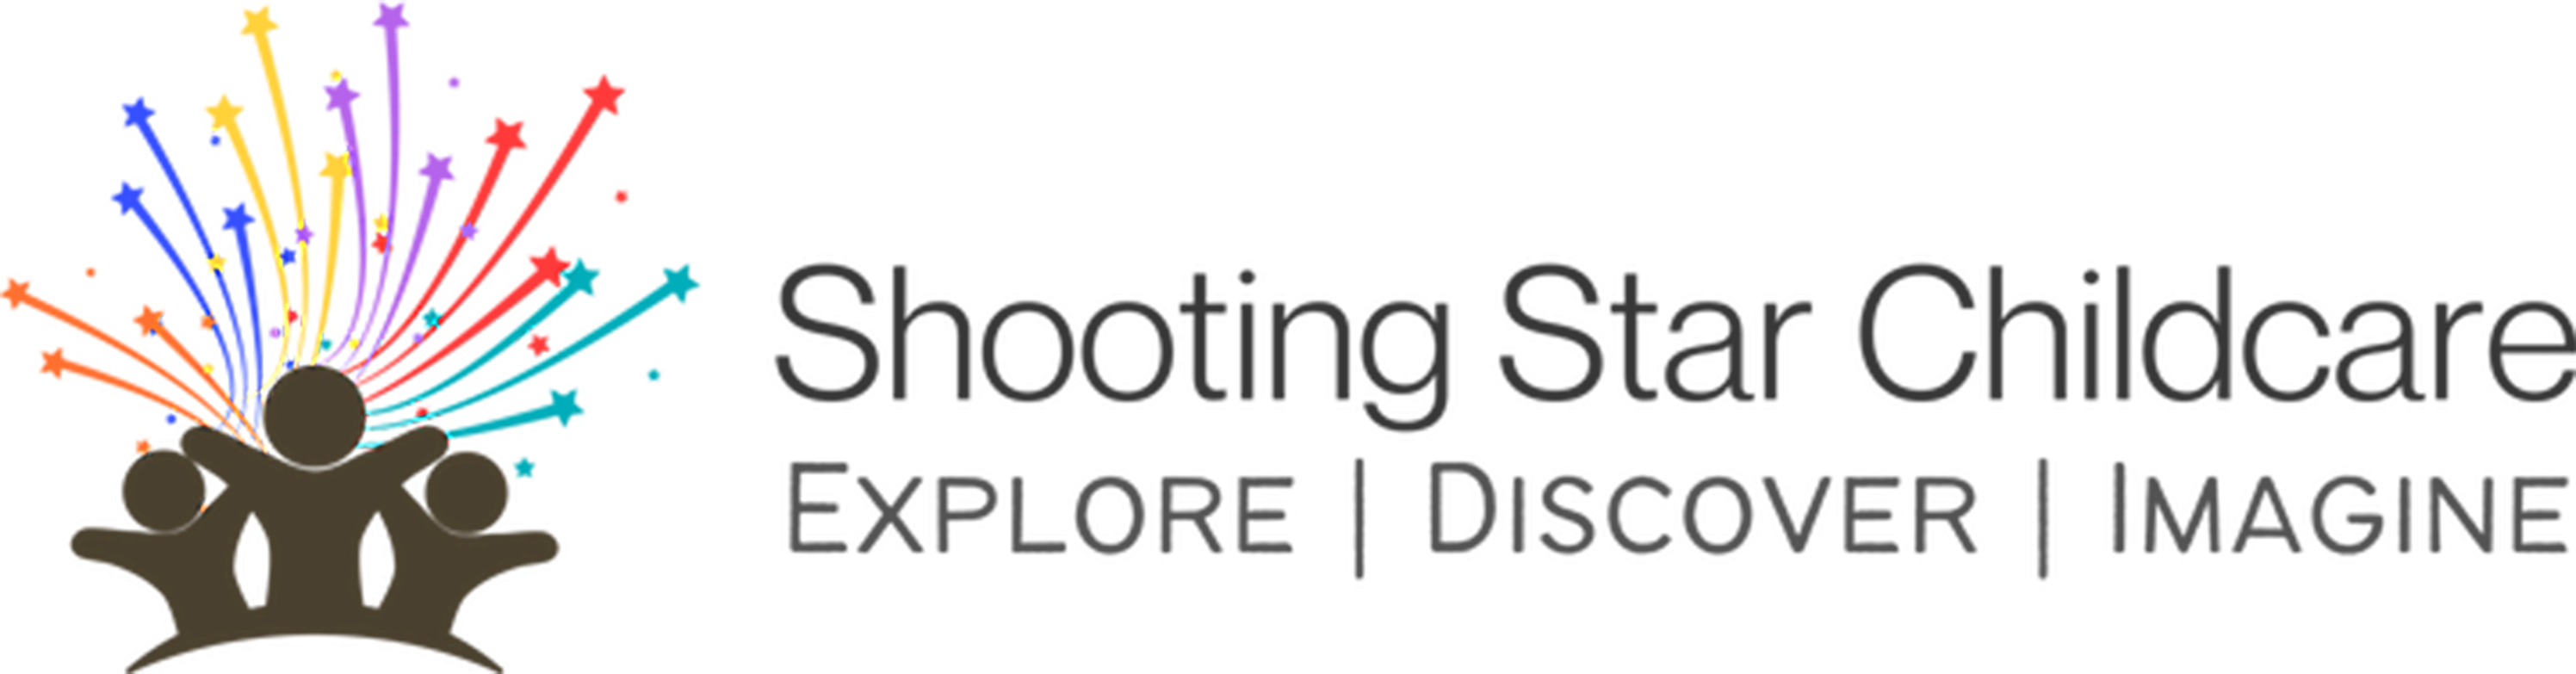 ShootingStarChildcare-Logo3